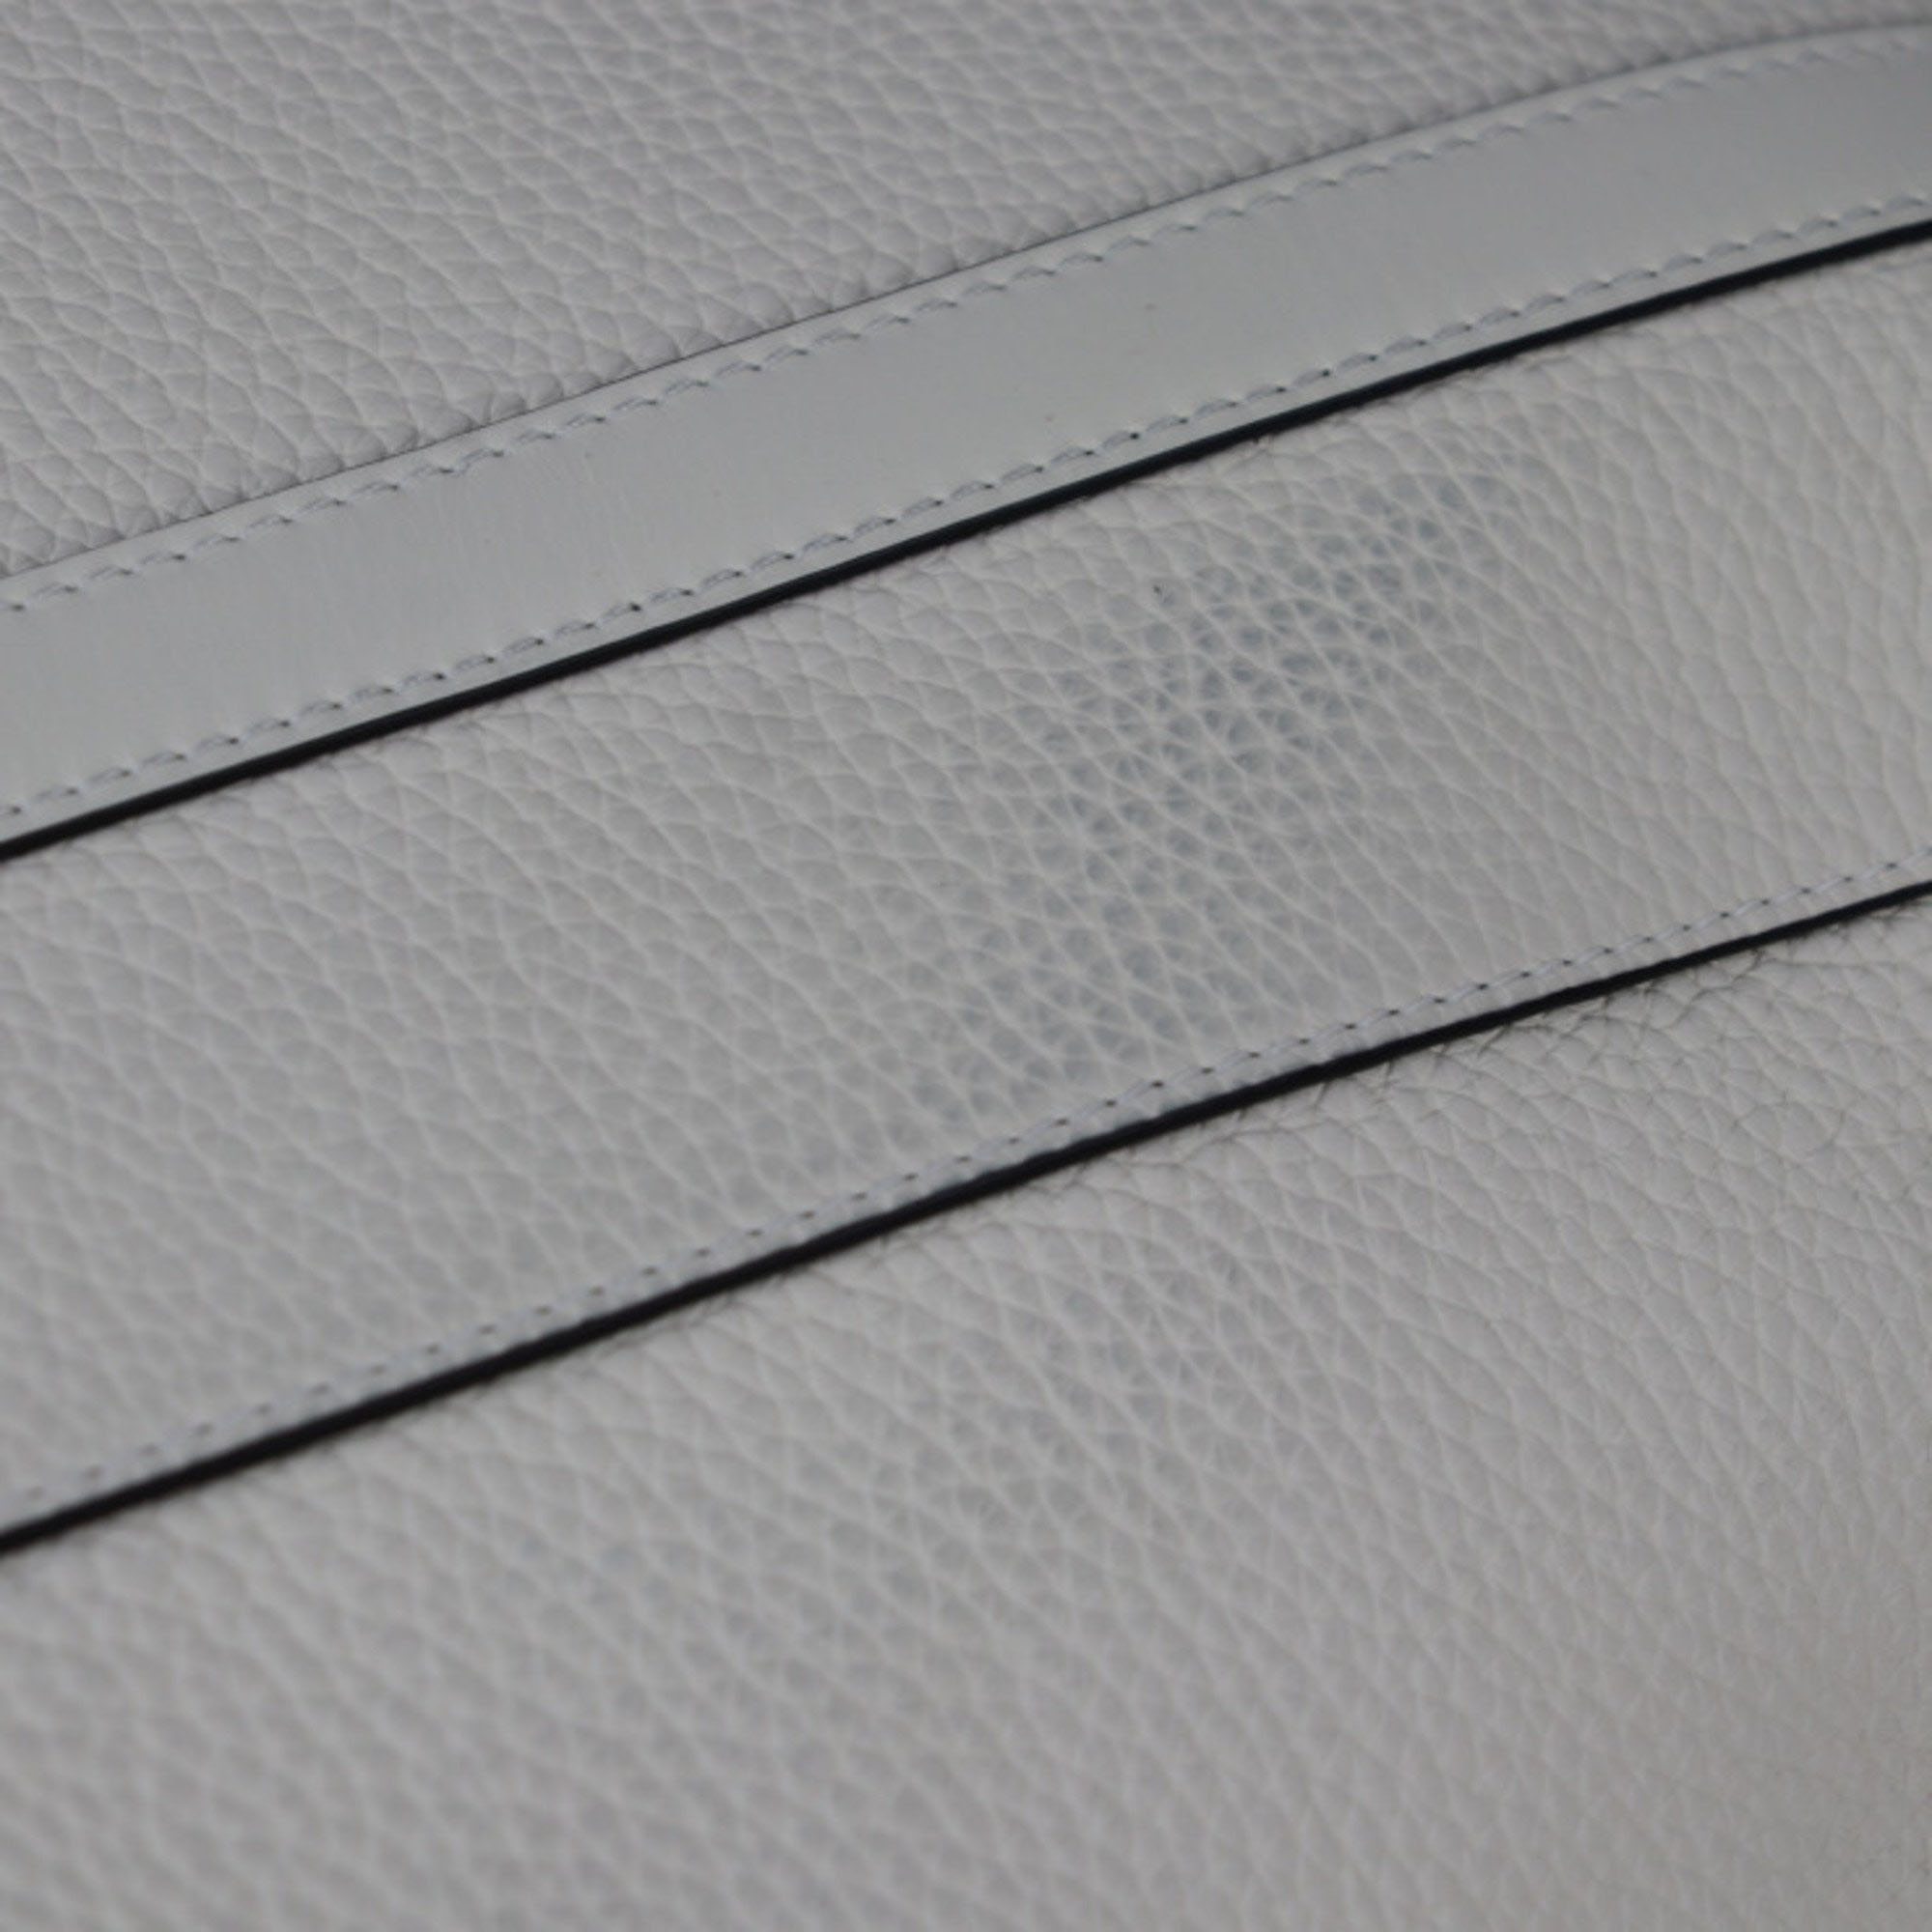 Louis Vuitton White Leather Christopher Tote Bag